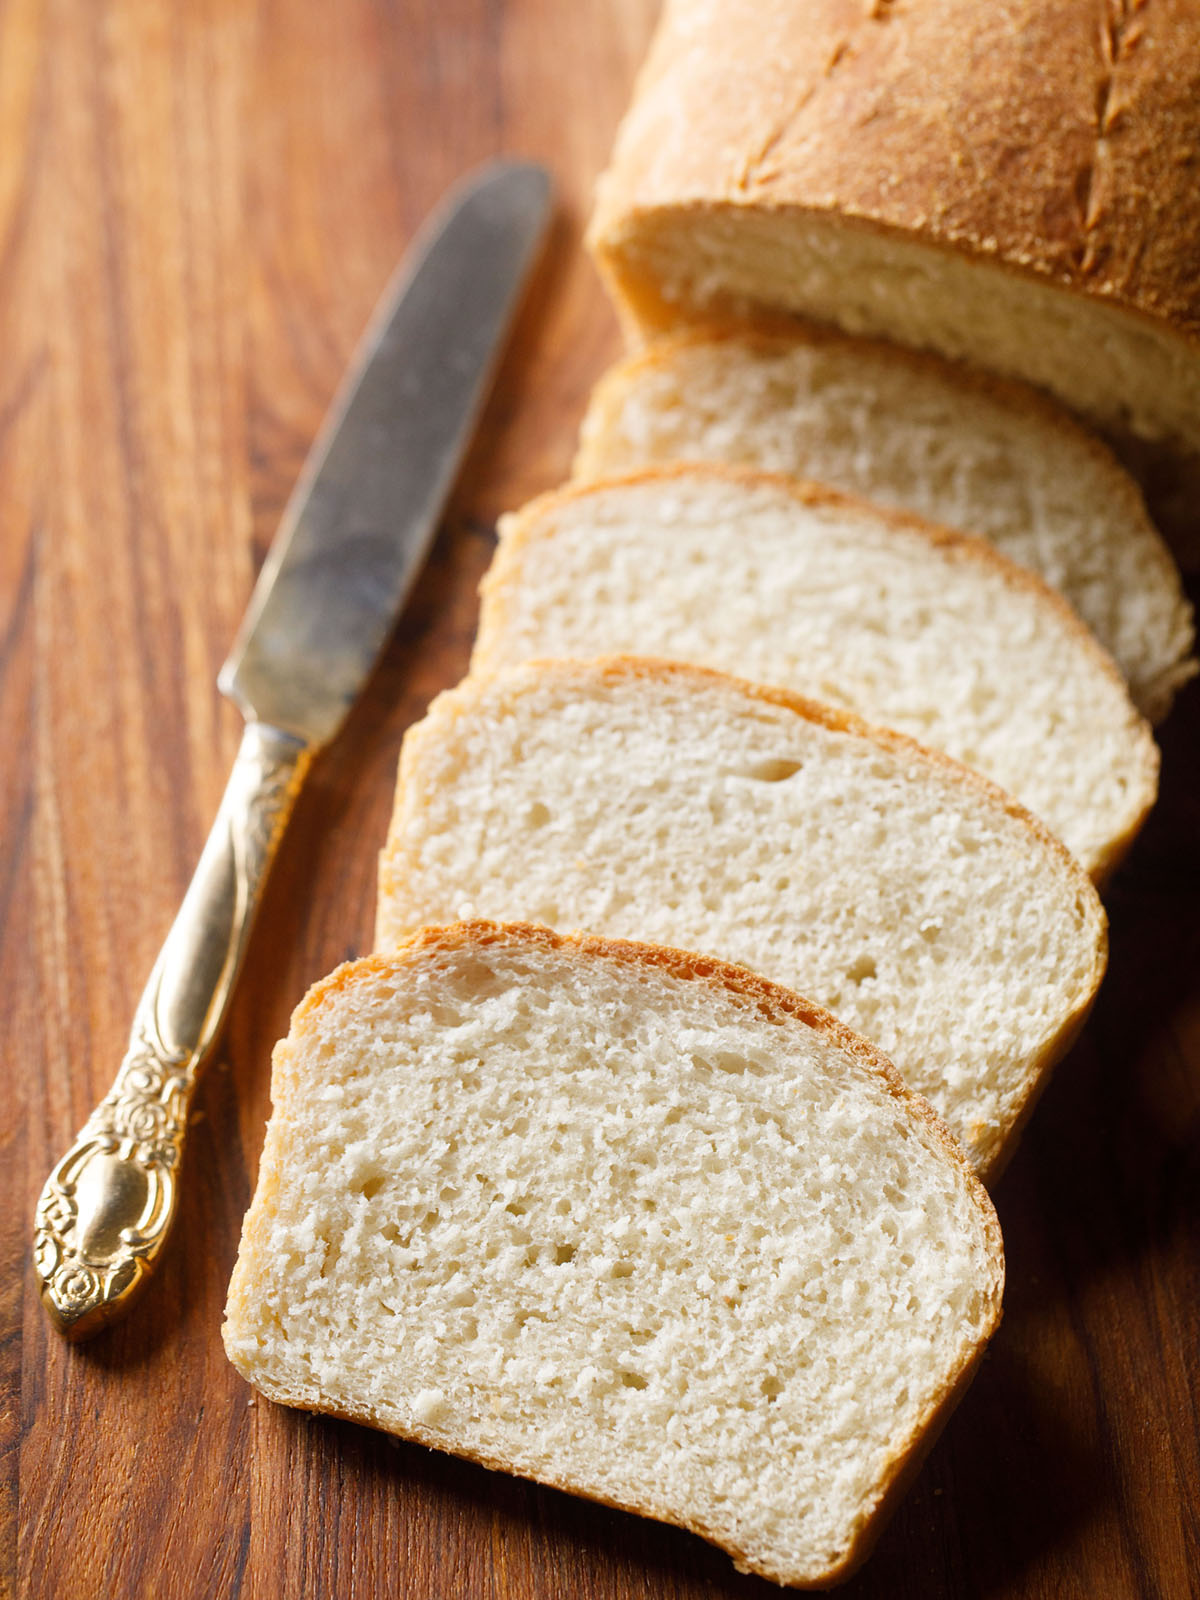 https://www.vegrecipesofindia.com/wp-content/uploads/2021/01/white-bread-recipe.jpg